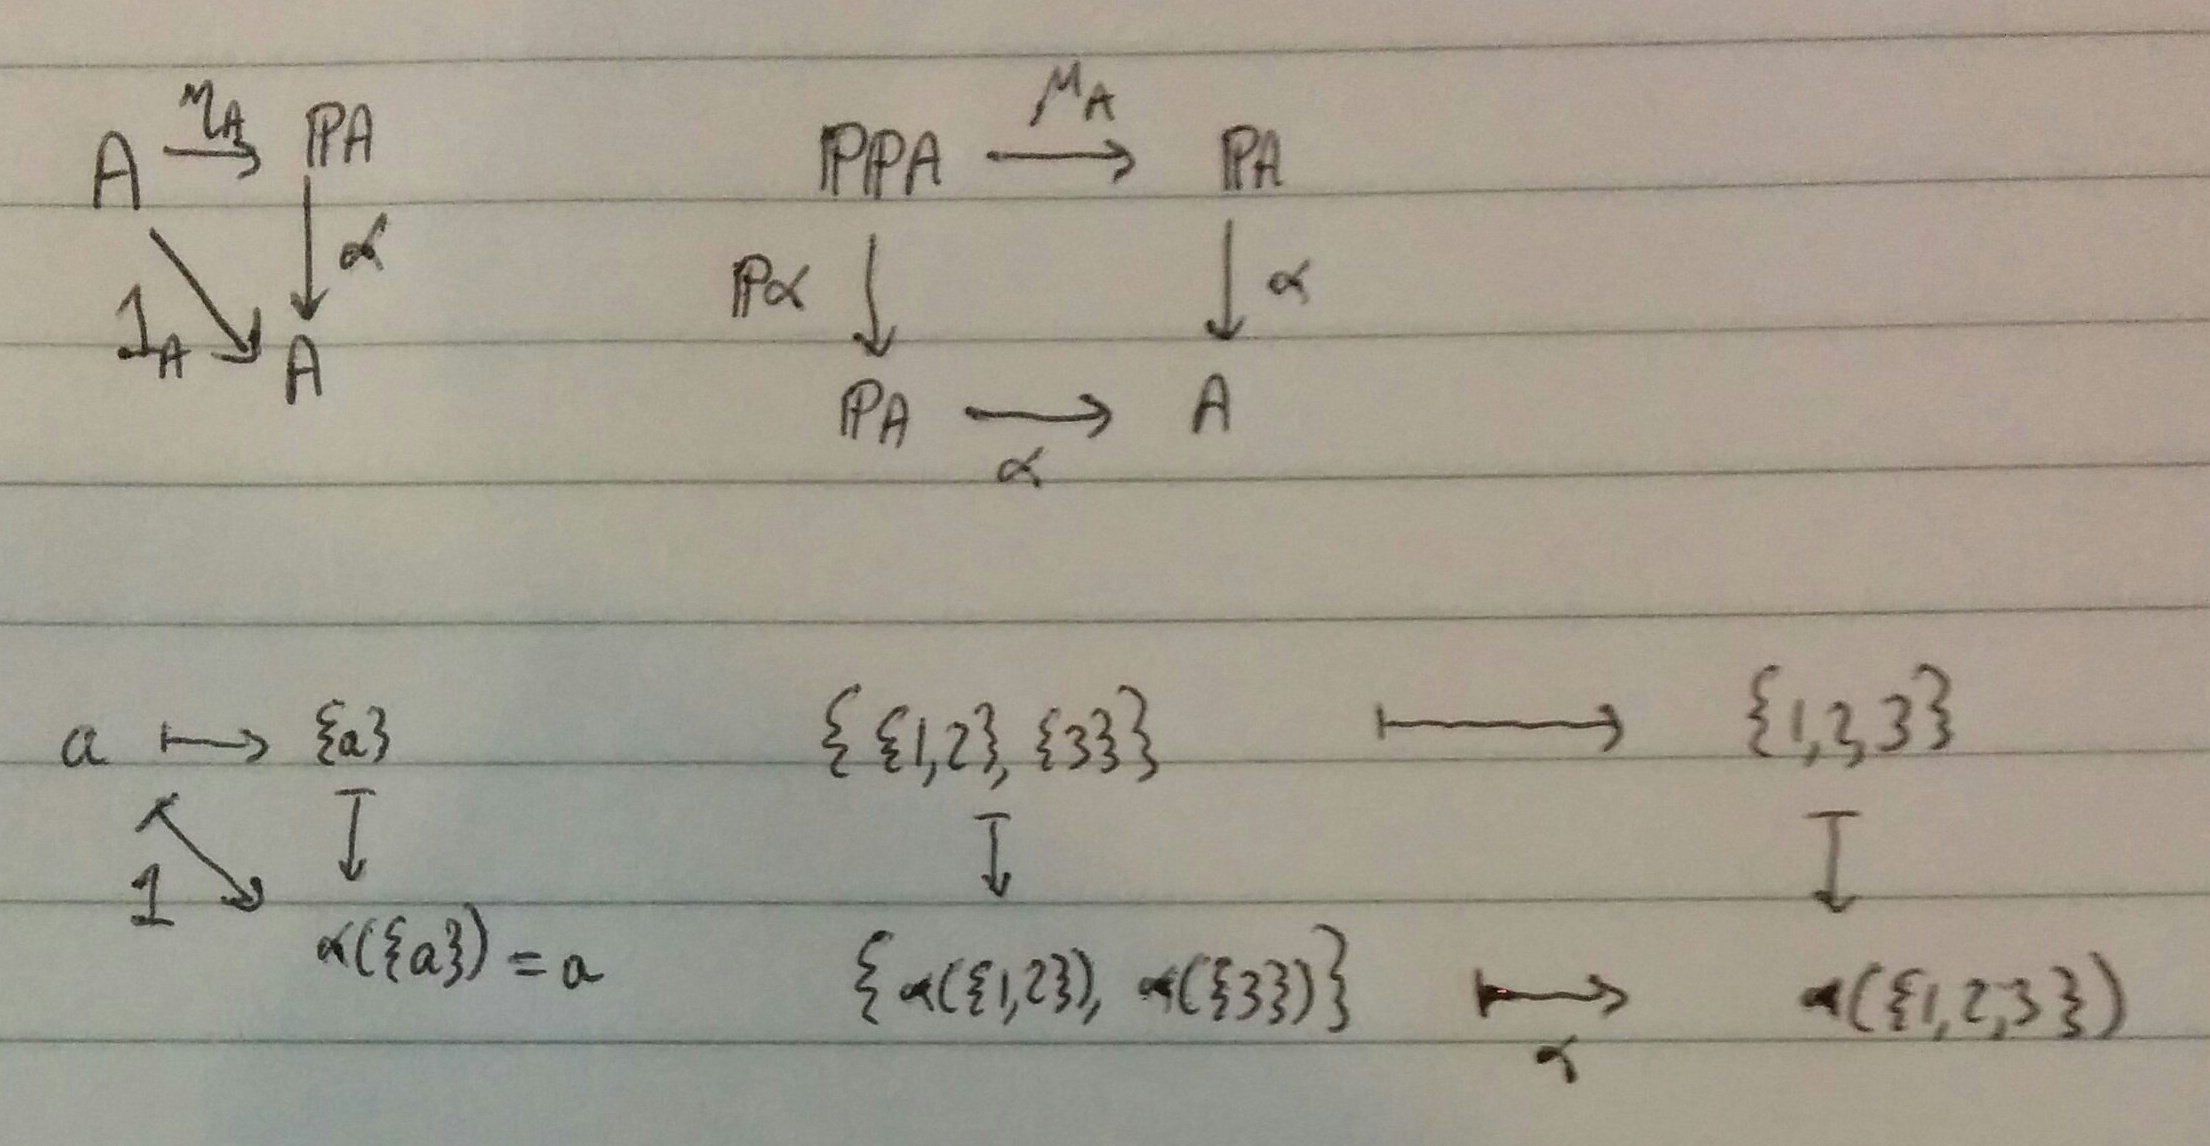 Power-set monad algebra diagram